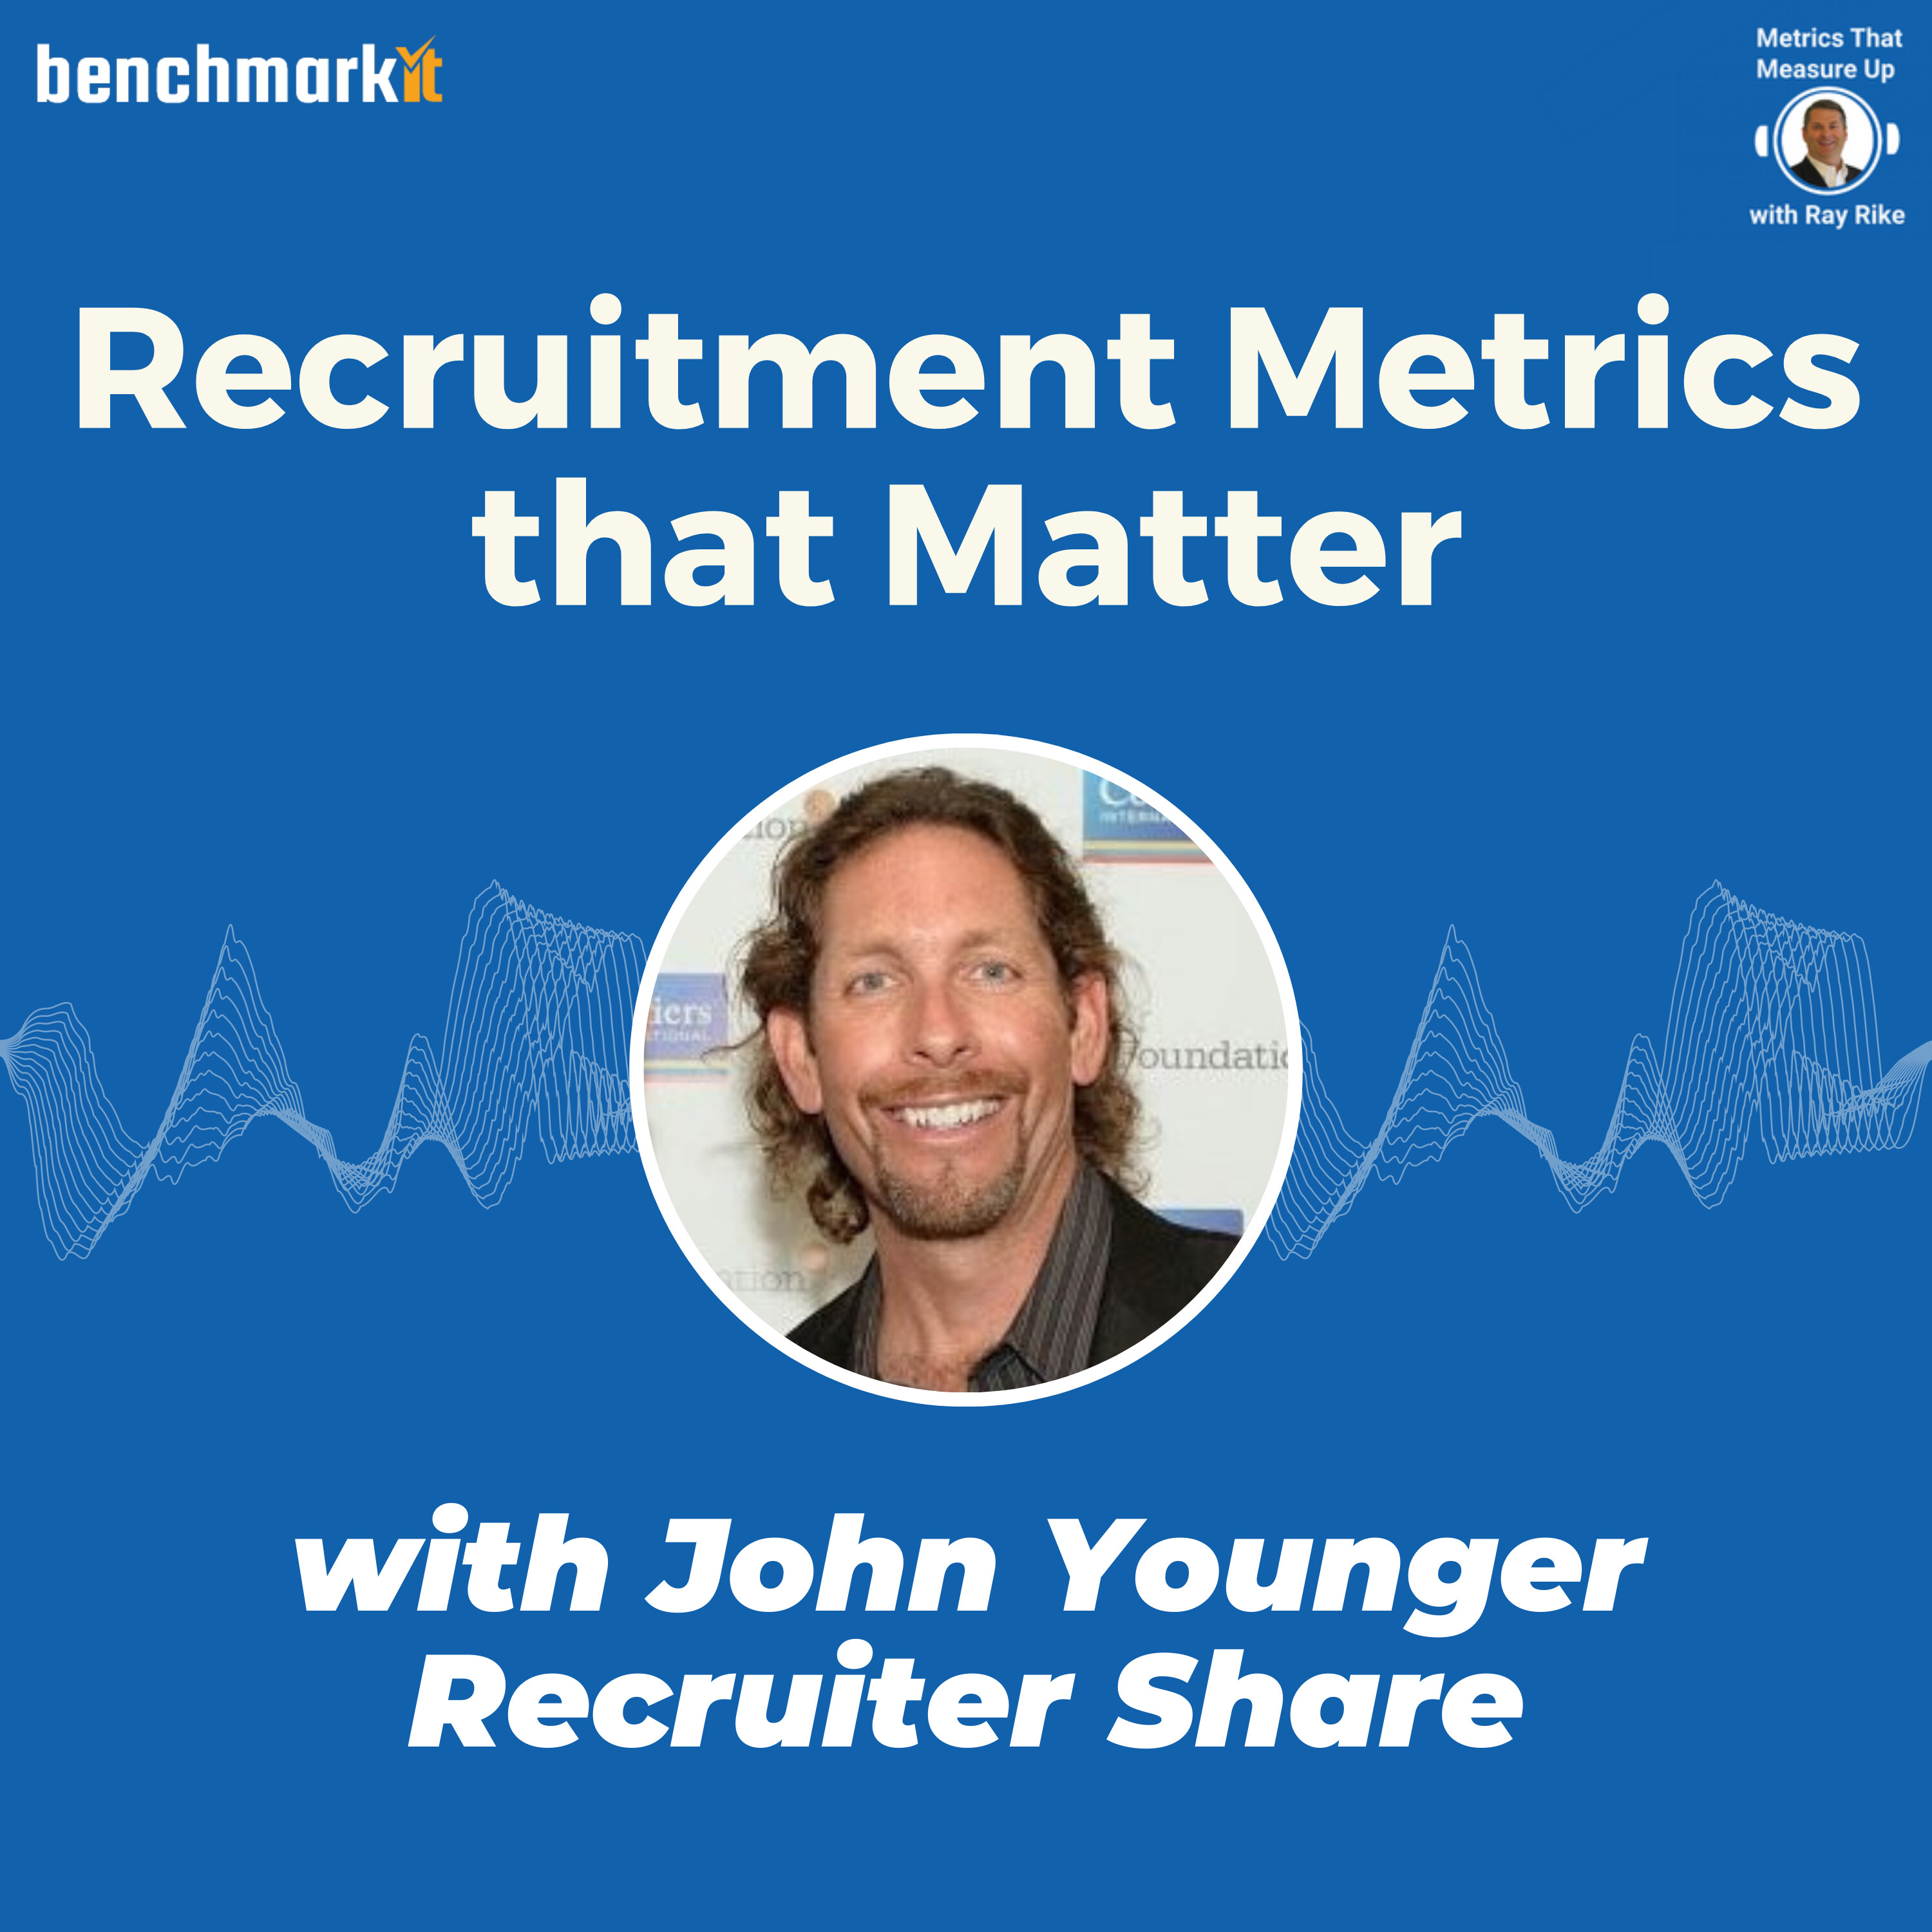 Recruitment Metrics - with John Younger - RecruiterShare